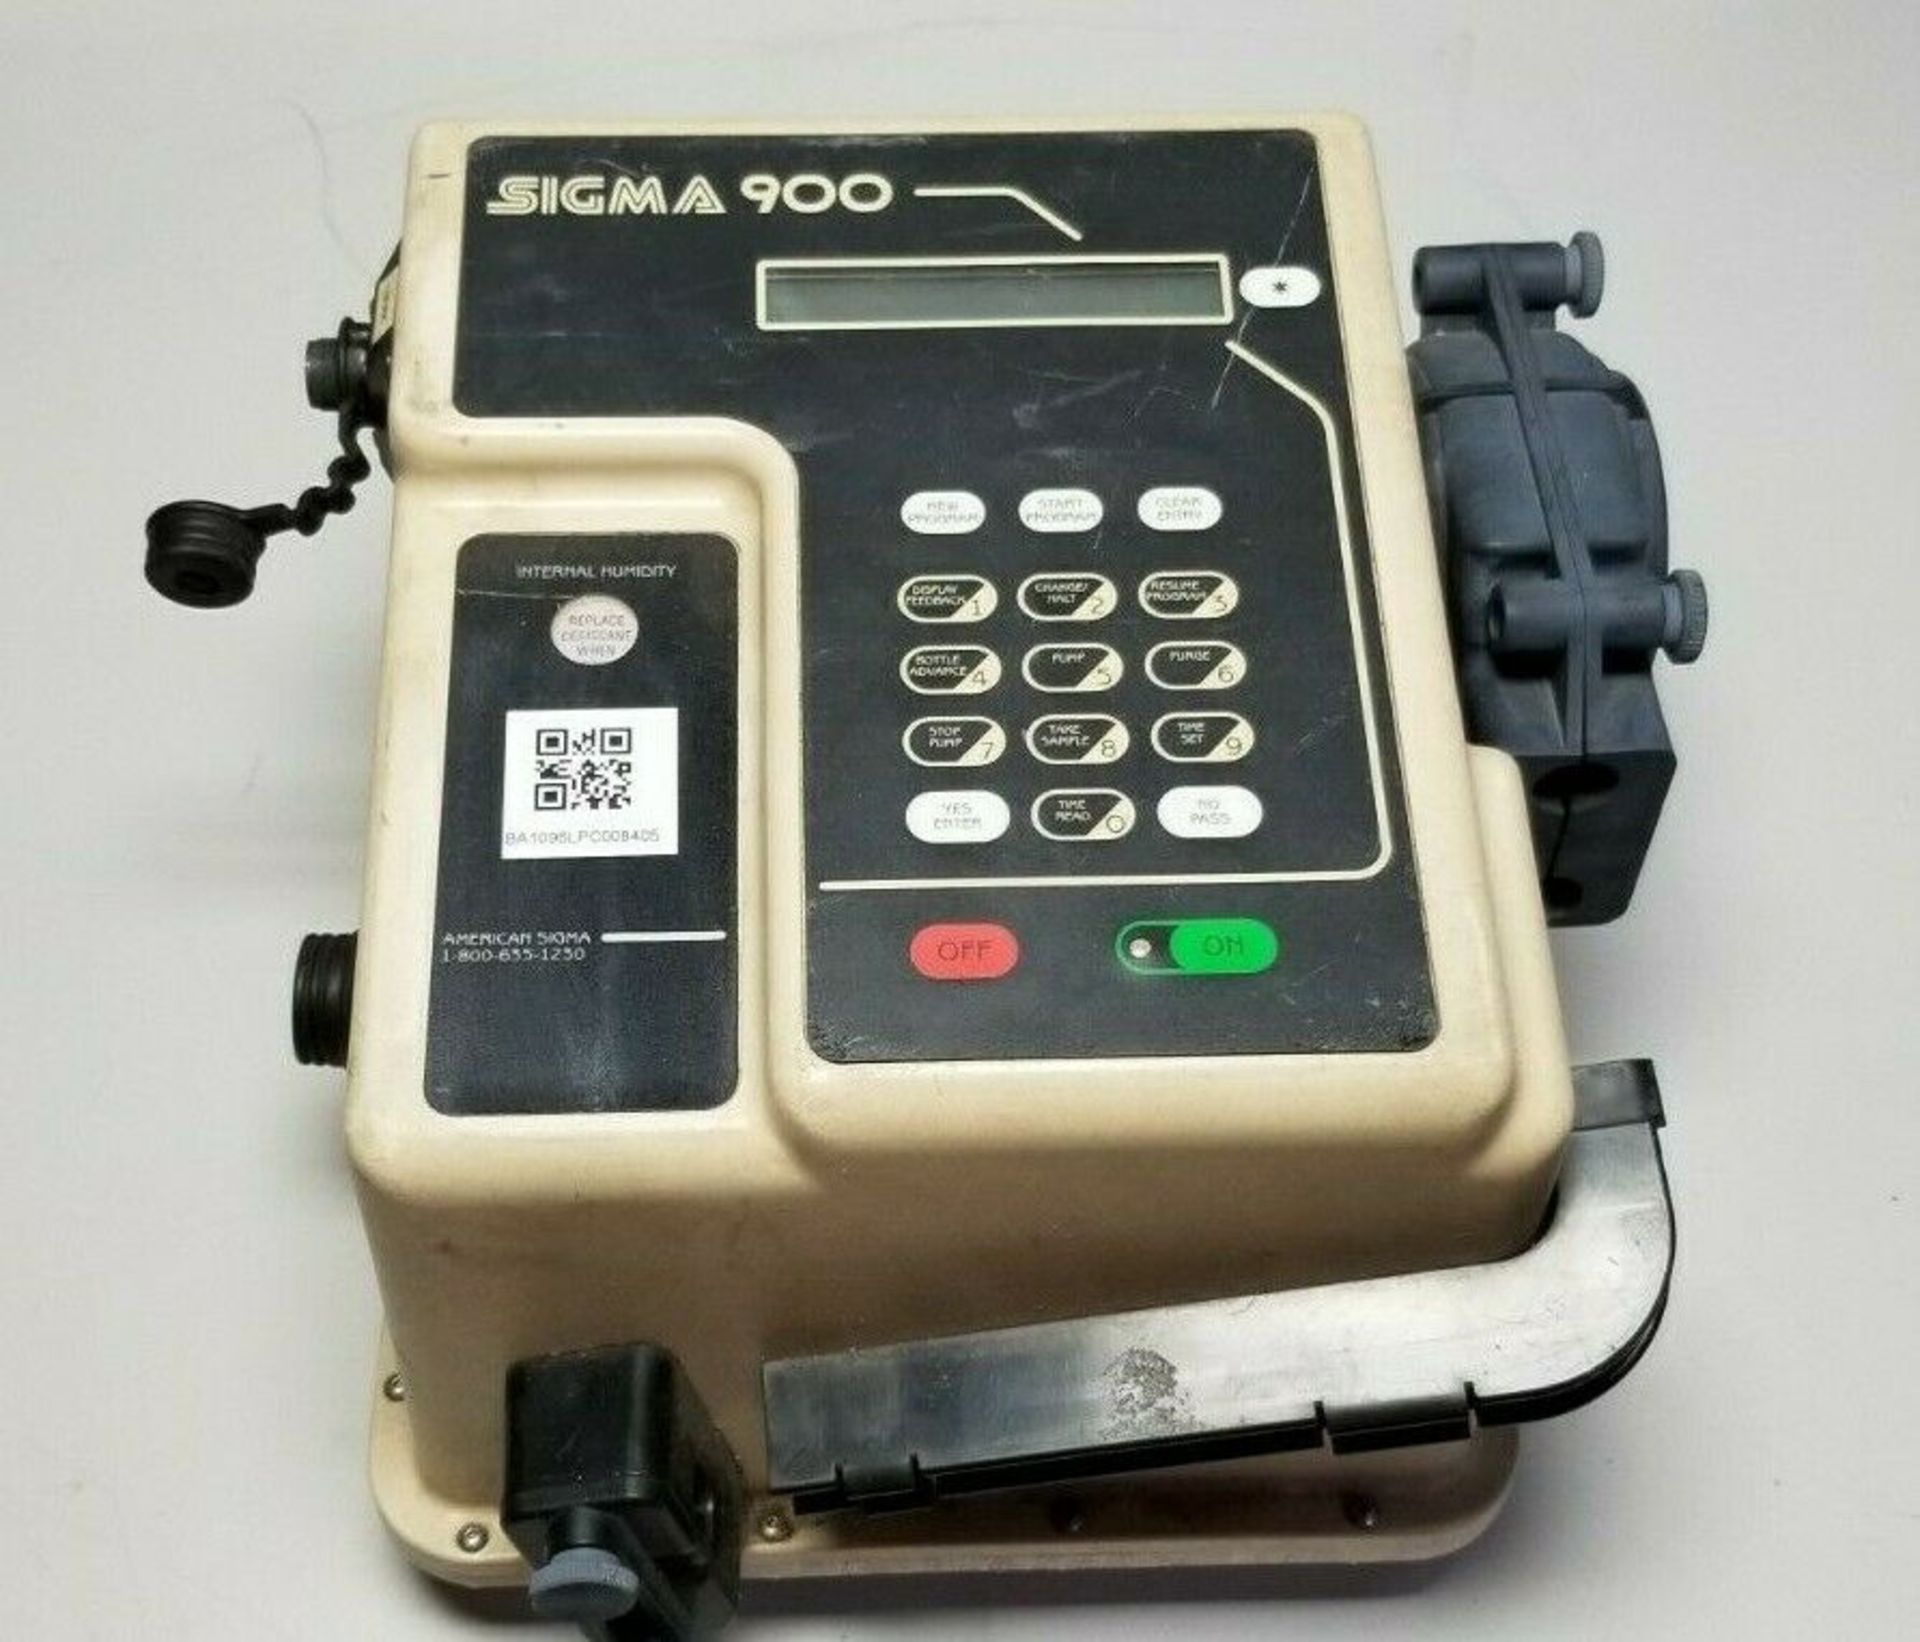 Sigma/Hach Portable Water Sampler Controller Model 900